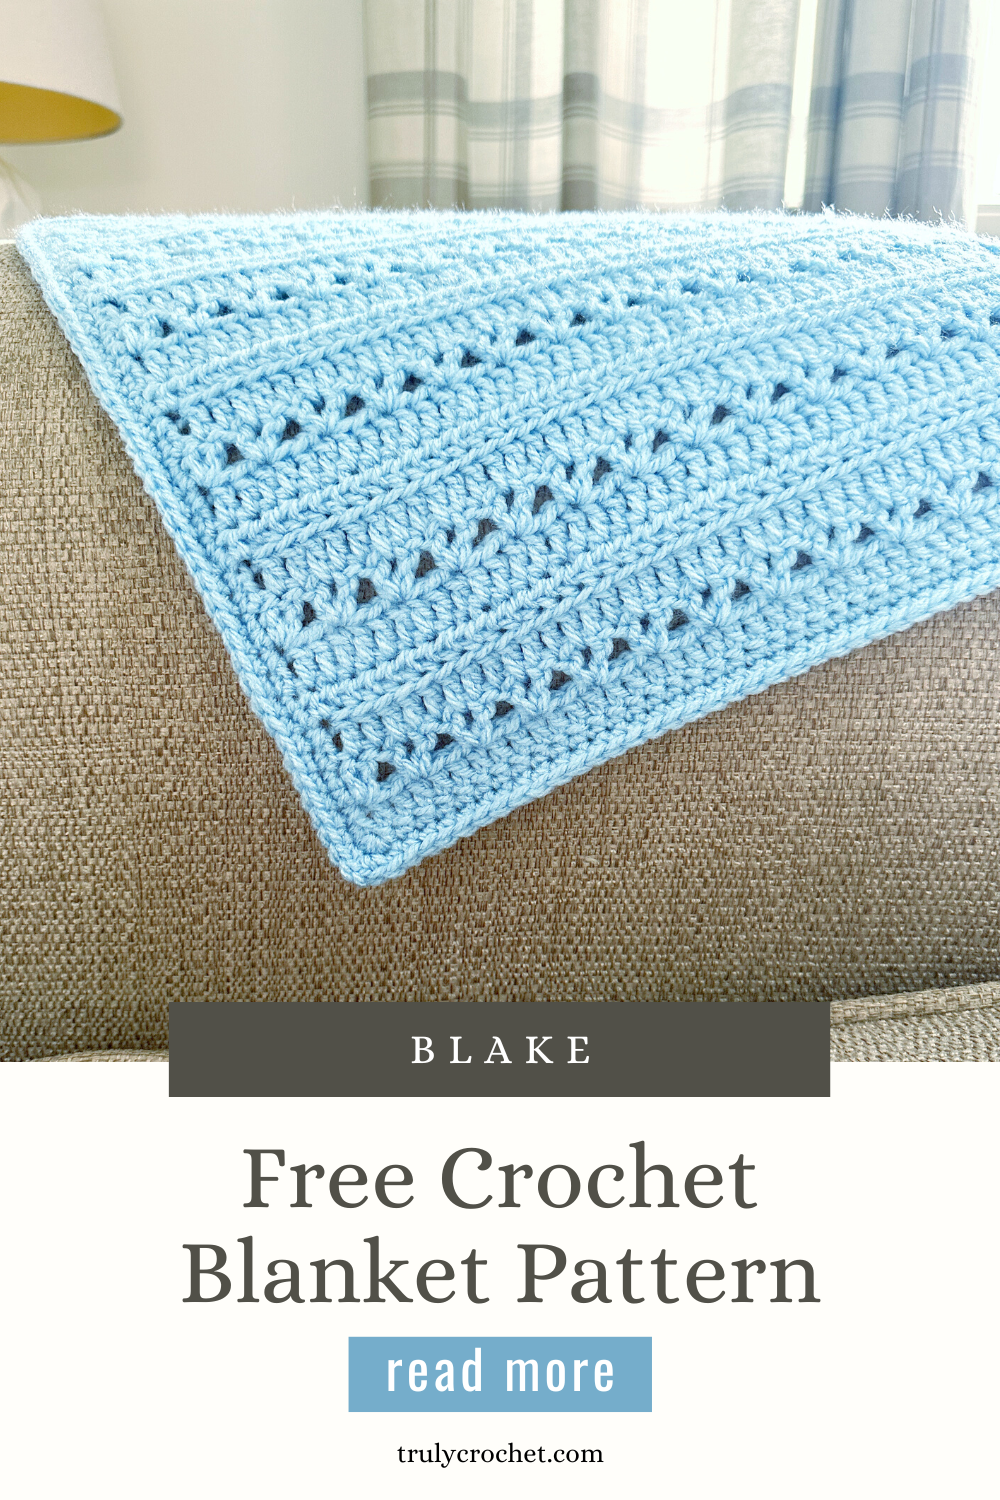 Blake Blanket - Free Crochet Pattern